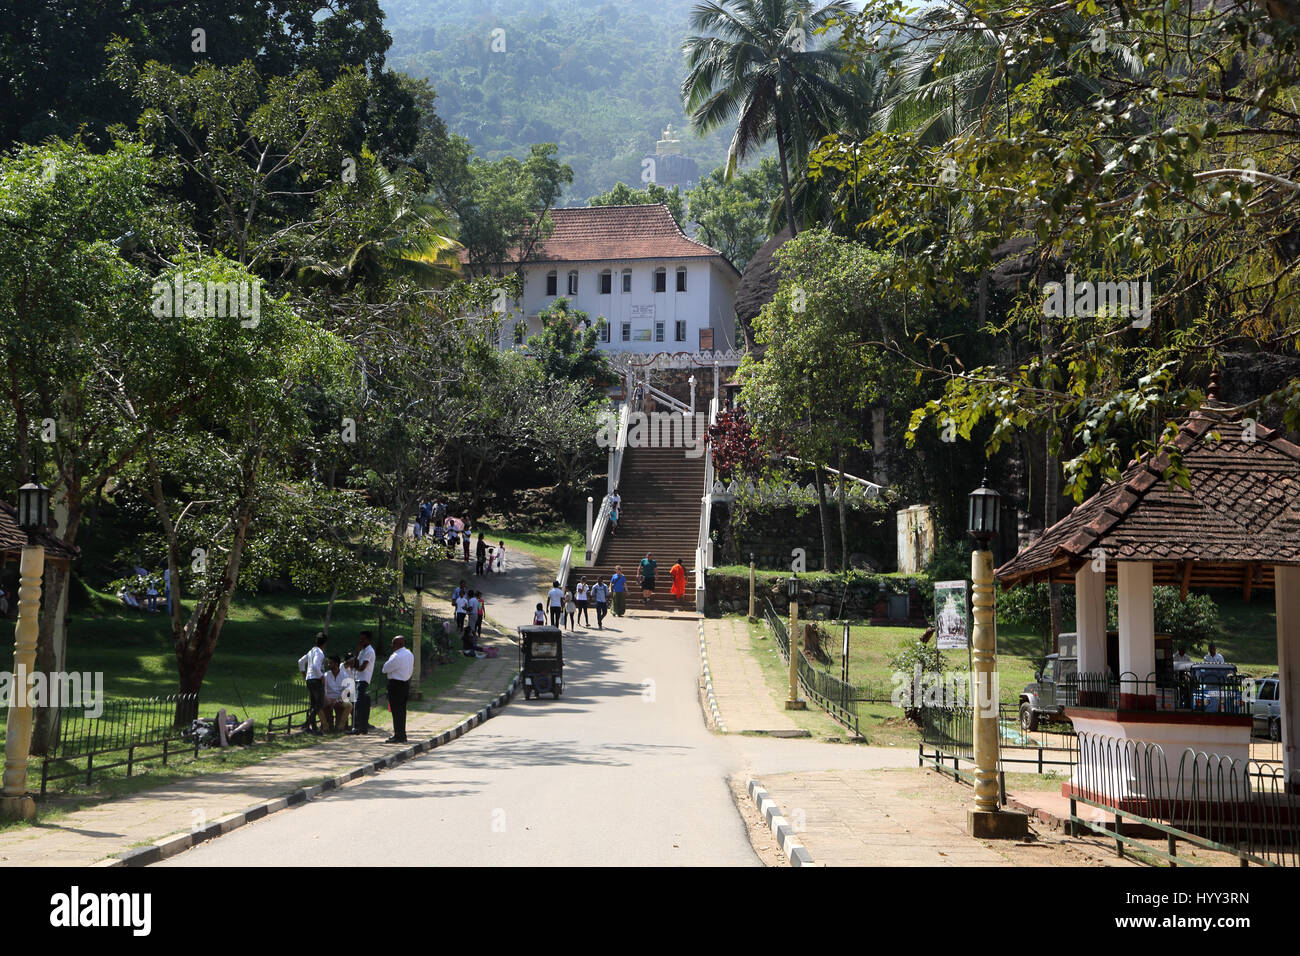 Aluviharaya Rock Cave Tempel Sri Lanka Matale-Distrikt Kandy-Dambulla Autobahn Treppe zum internationalen buddhistischen Library And Museum und Sri Budd Stockfoto